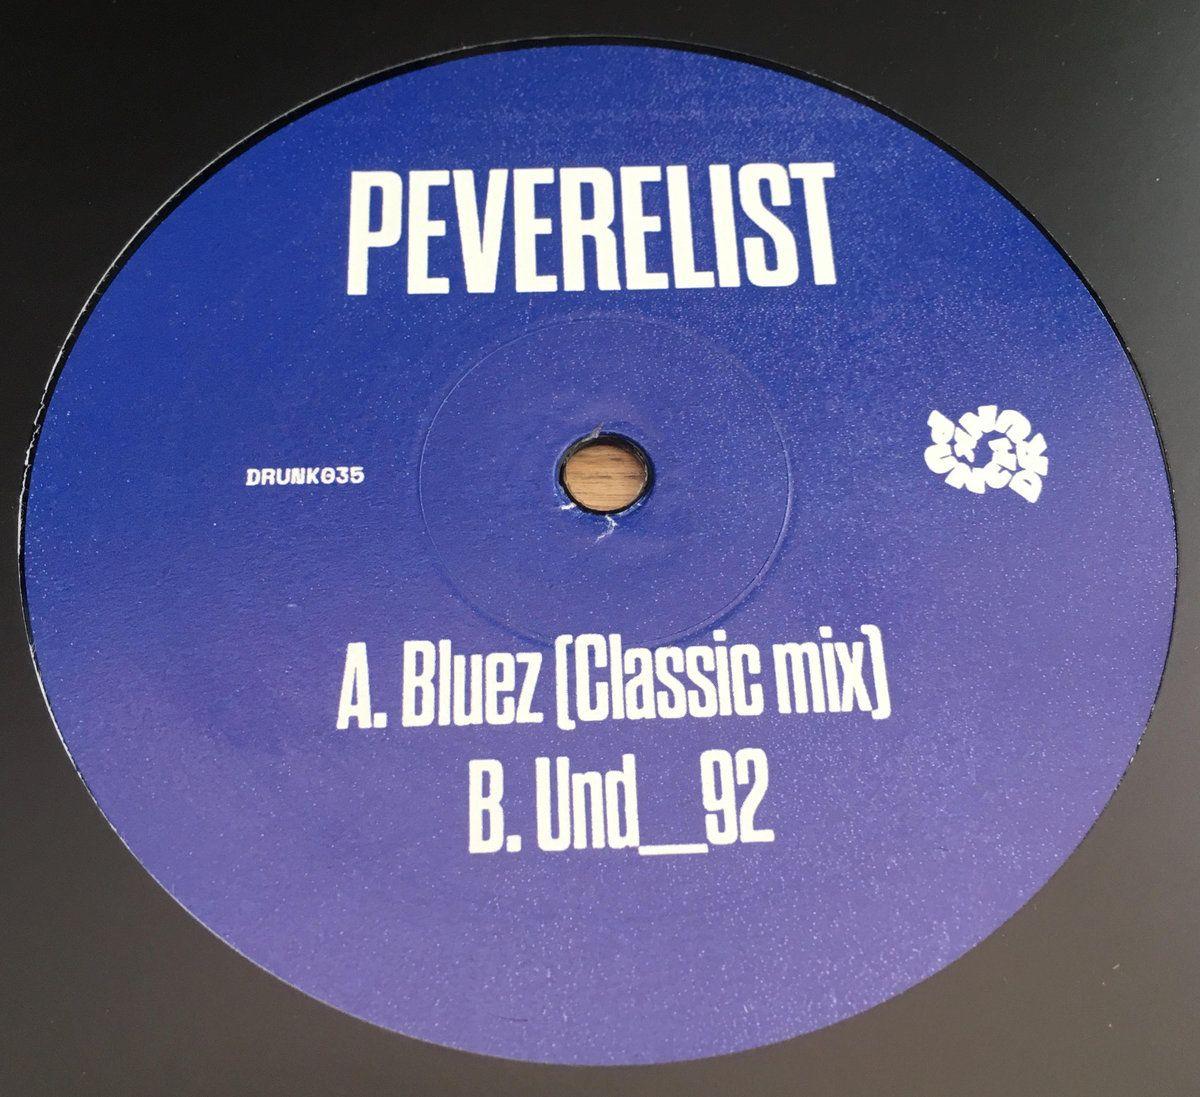 Black and Blue Z Logo - Bluez (Classic mix) / Und_92 | Peverelist